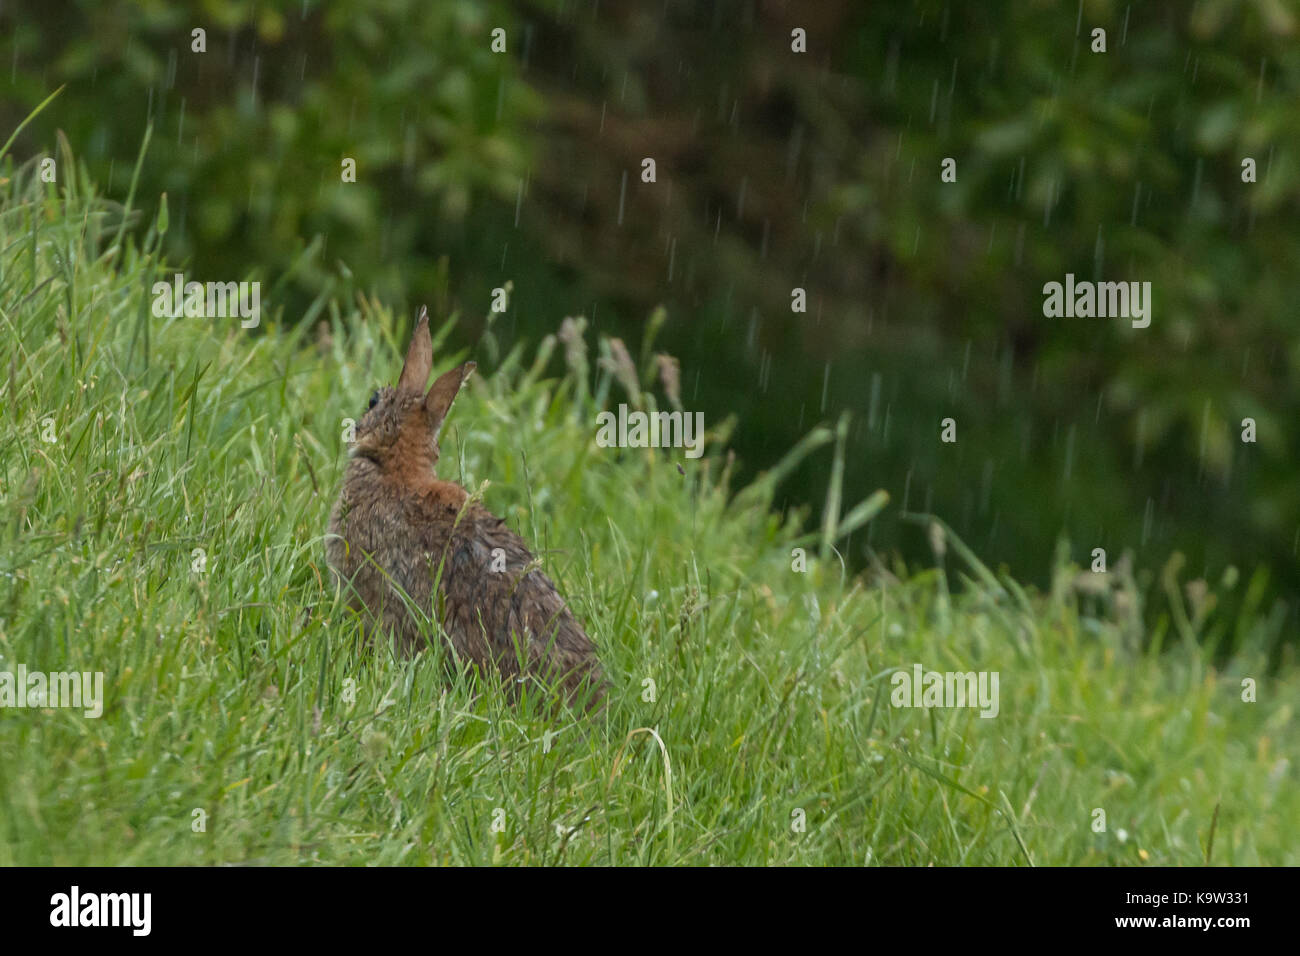 A single brown wild rabbit sitting in a grassy field in the rain near Dunedin, New Zealand. Stock Photo